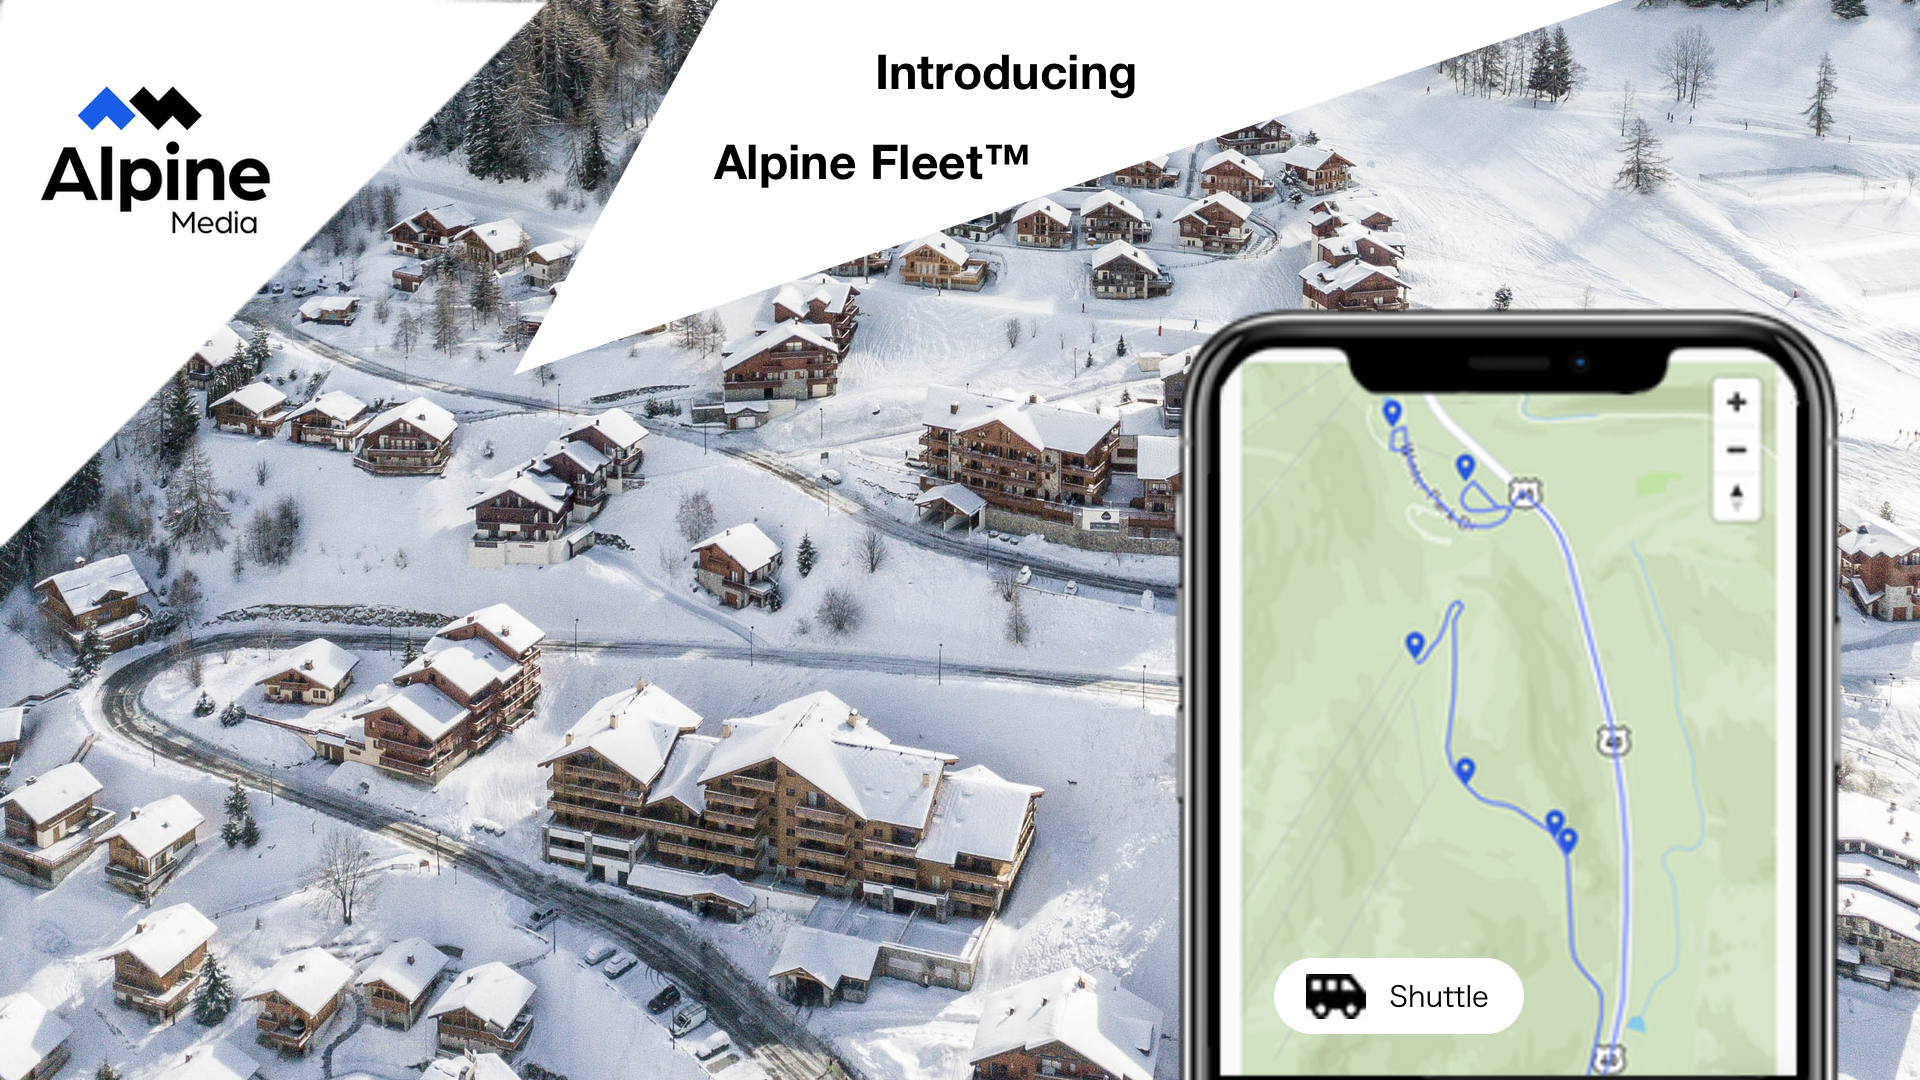 Alpine Media launches Alpine Fleet™